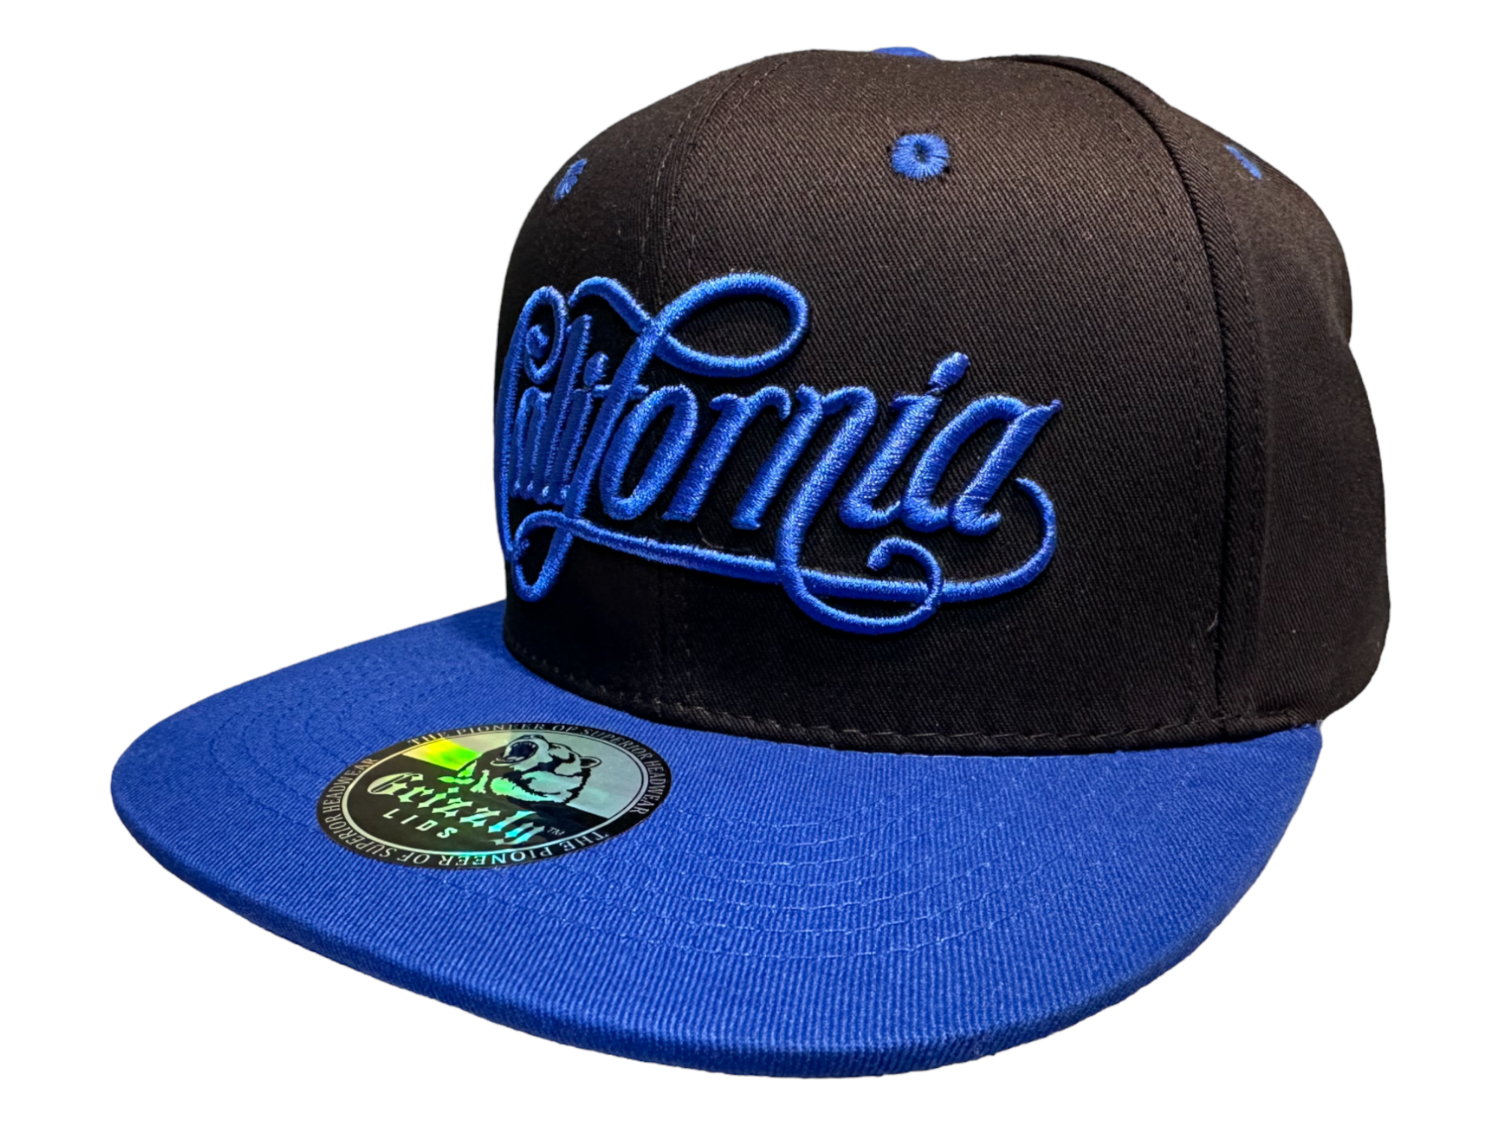 California Cursive Embroidered Snapback 6 Panel Adjustable Snap Fit Hat